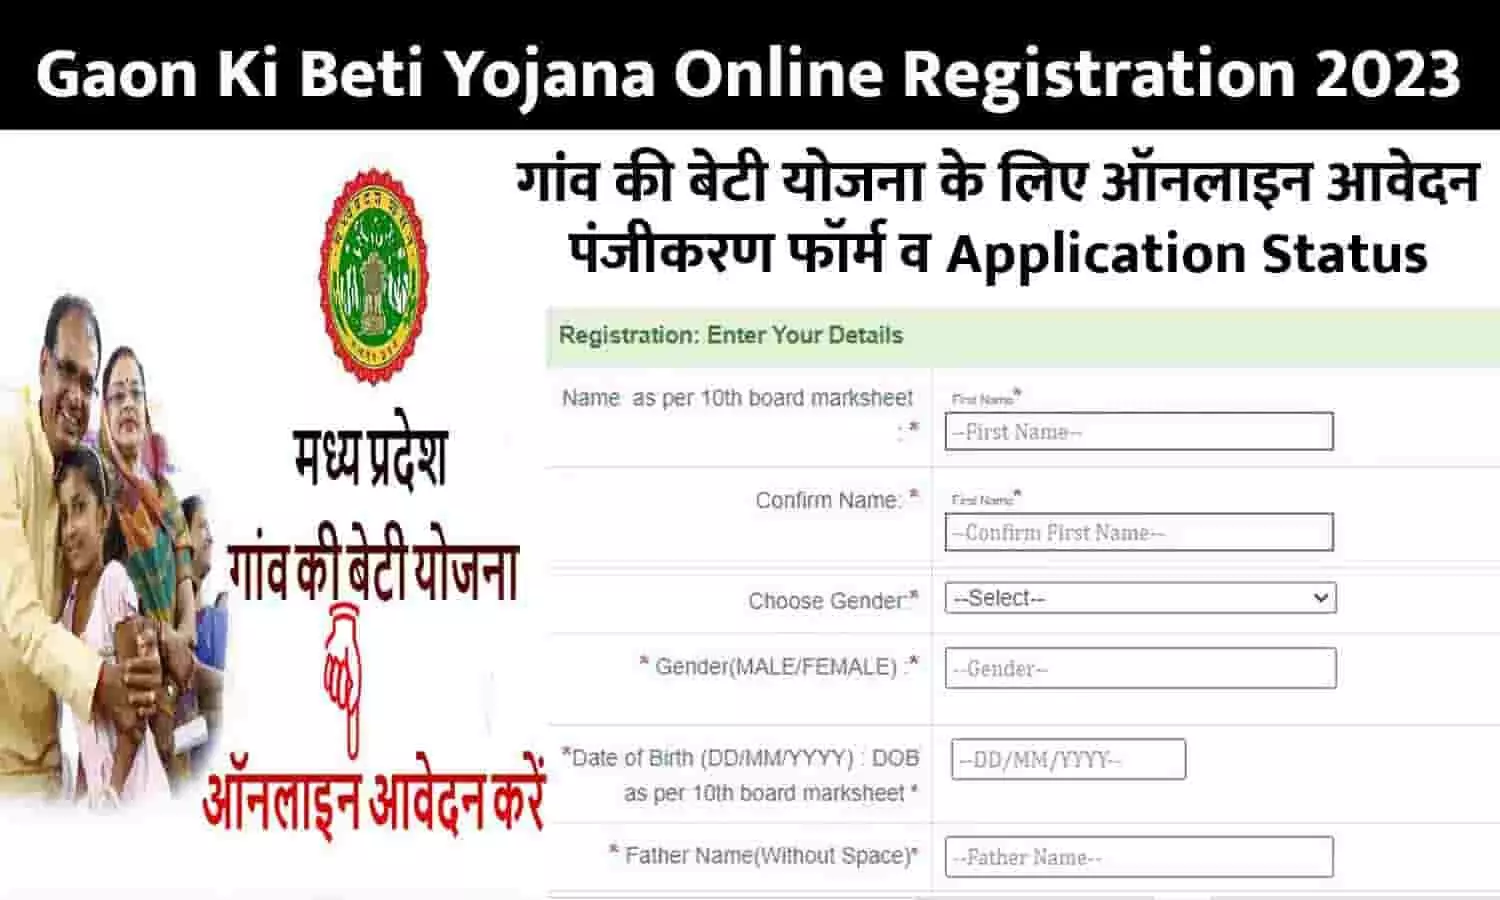 Gaon Ki Beti Yojana Online Registration 2023: गांव की बेटी योजना के लिए ऑनलाइन आवेदन, पंजीकरण फॉर्म व Application Status